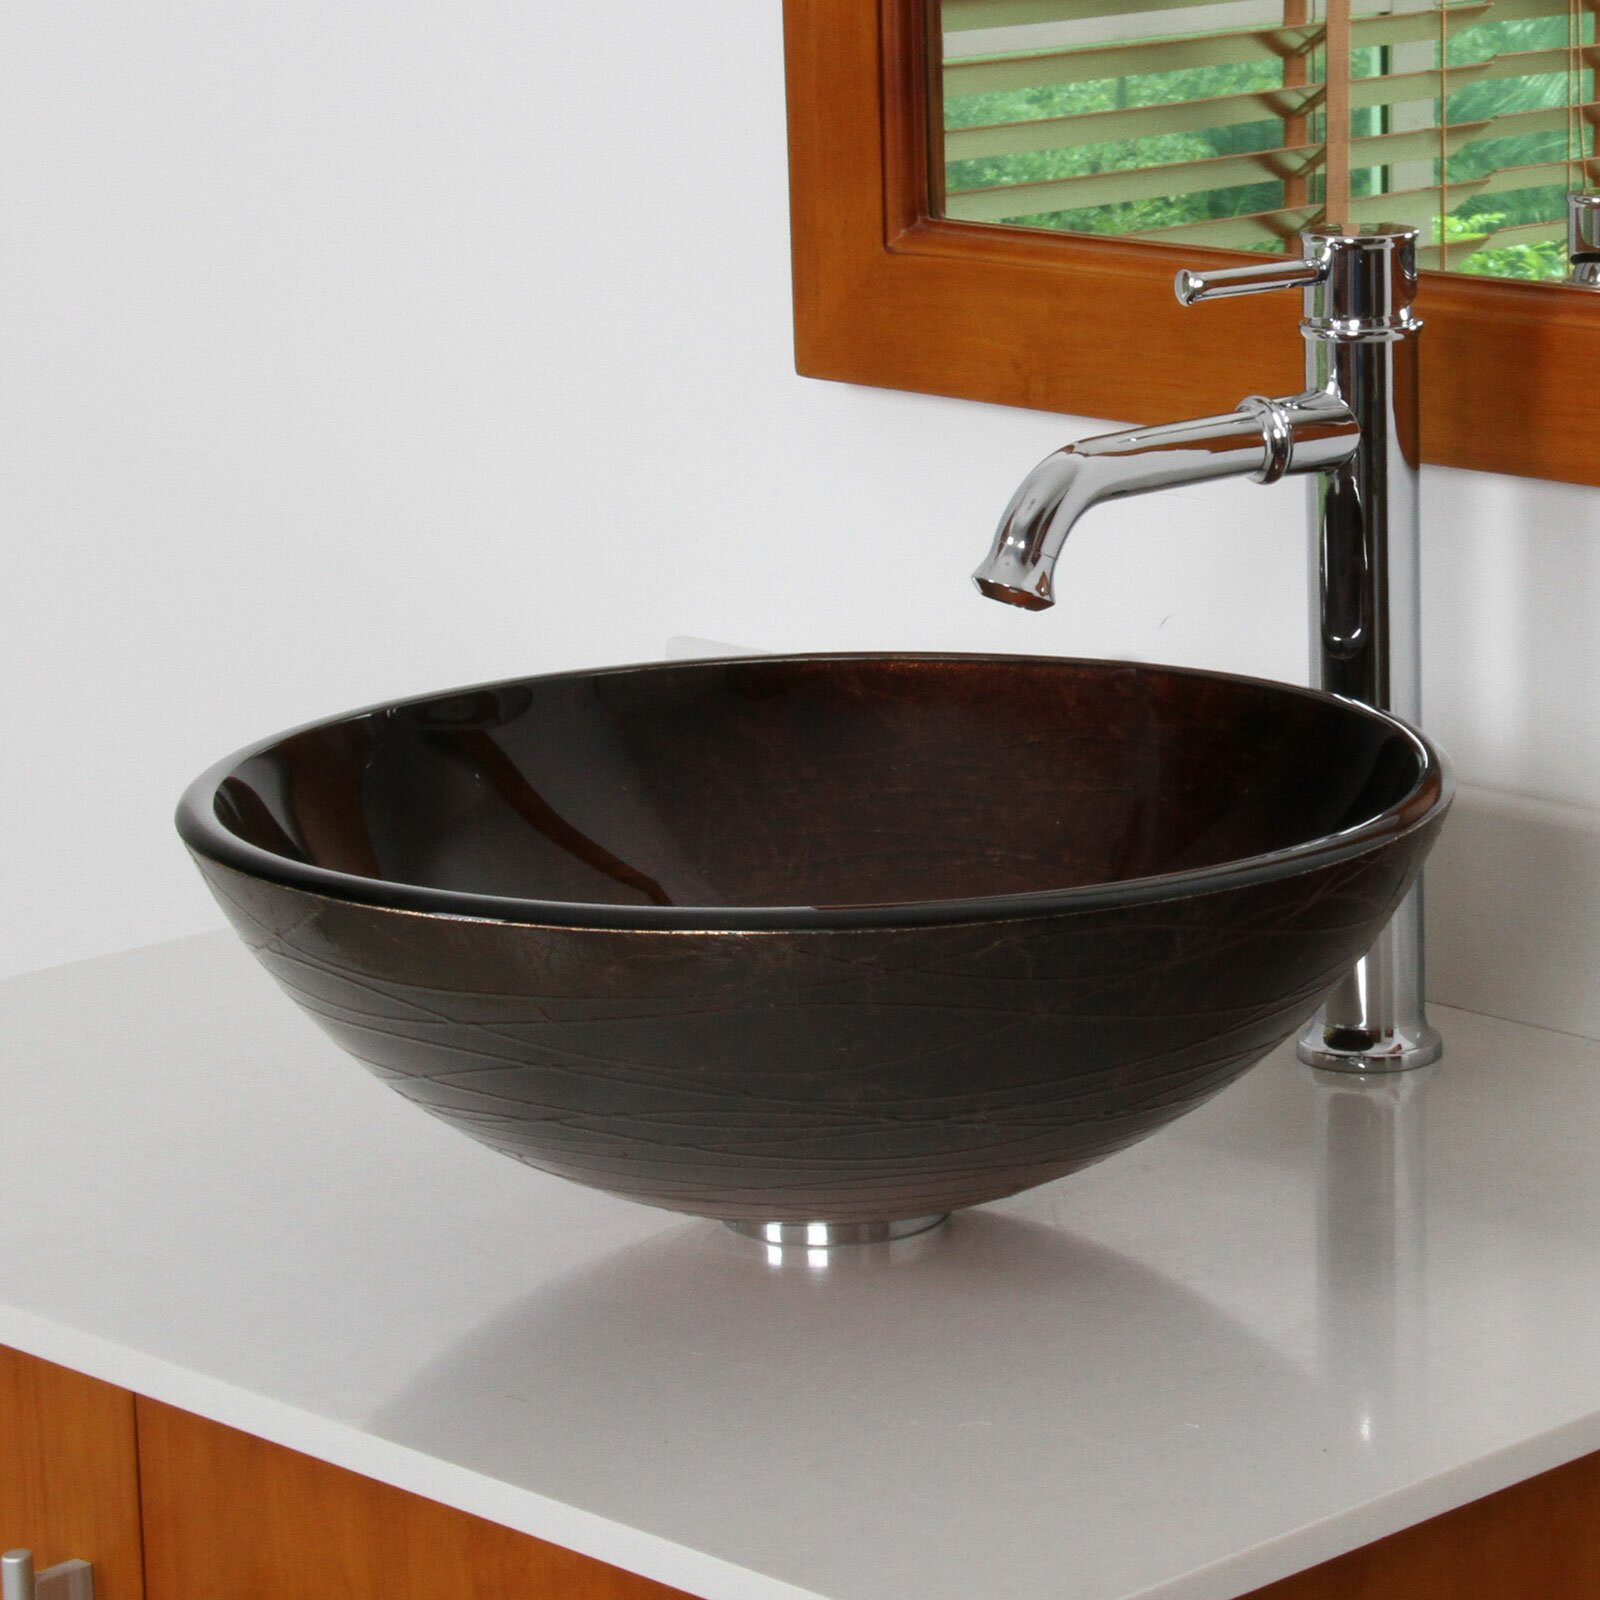 Sink Bowls For Bathroom
 Elite Neutral Handcrafted Glass Bowl Vessel Bathroom Sink